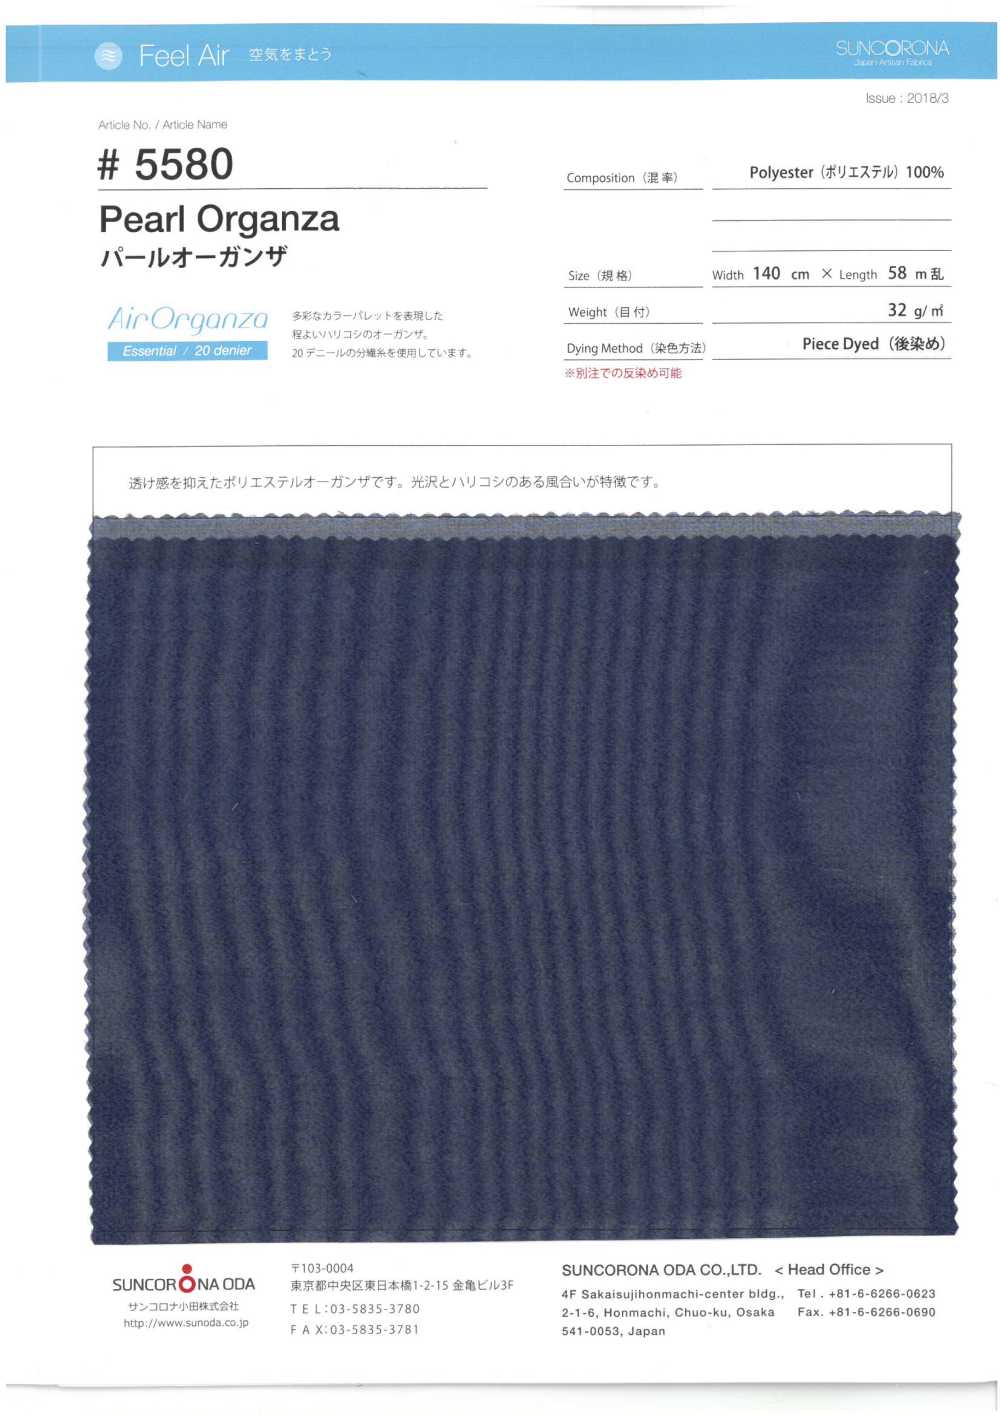 5580 Perlen Organdy[Textilgewebe] Suncorona Oda